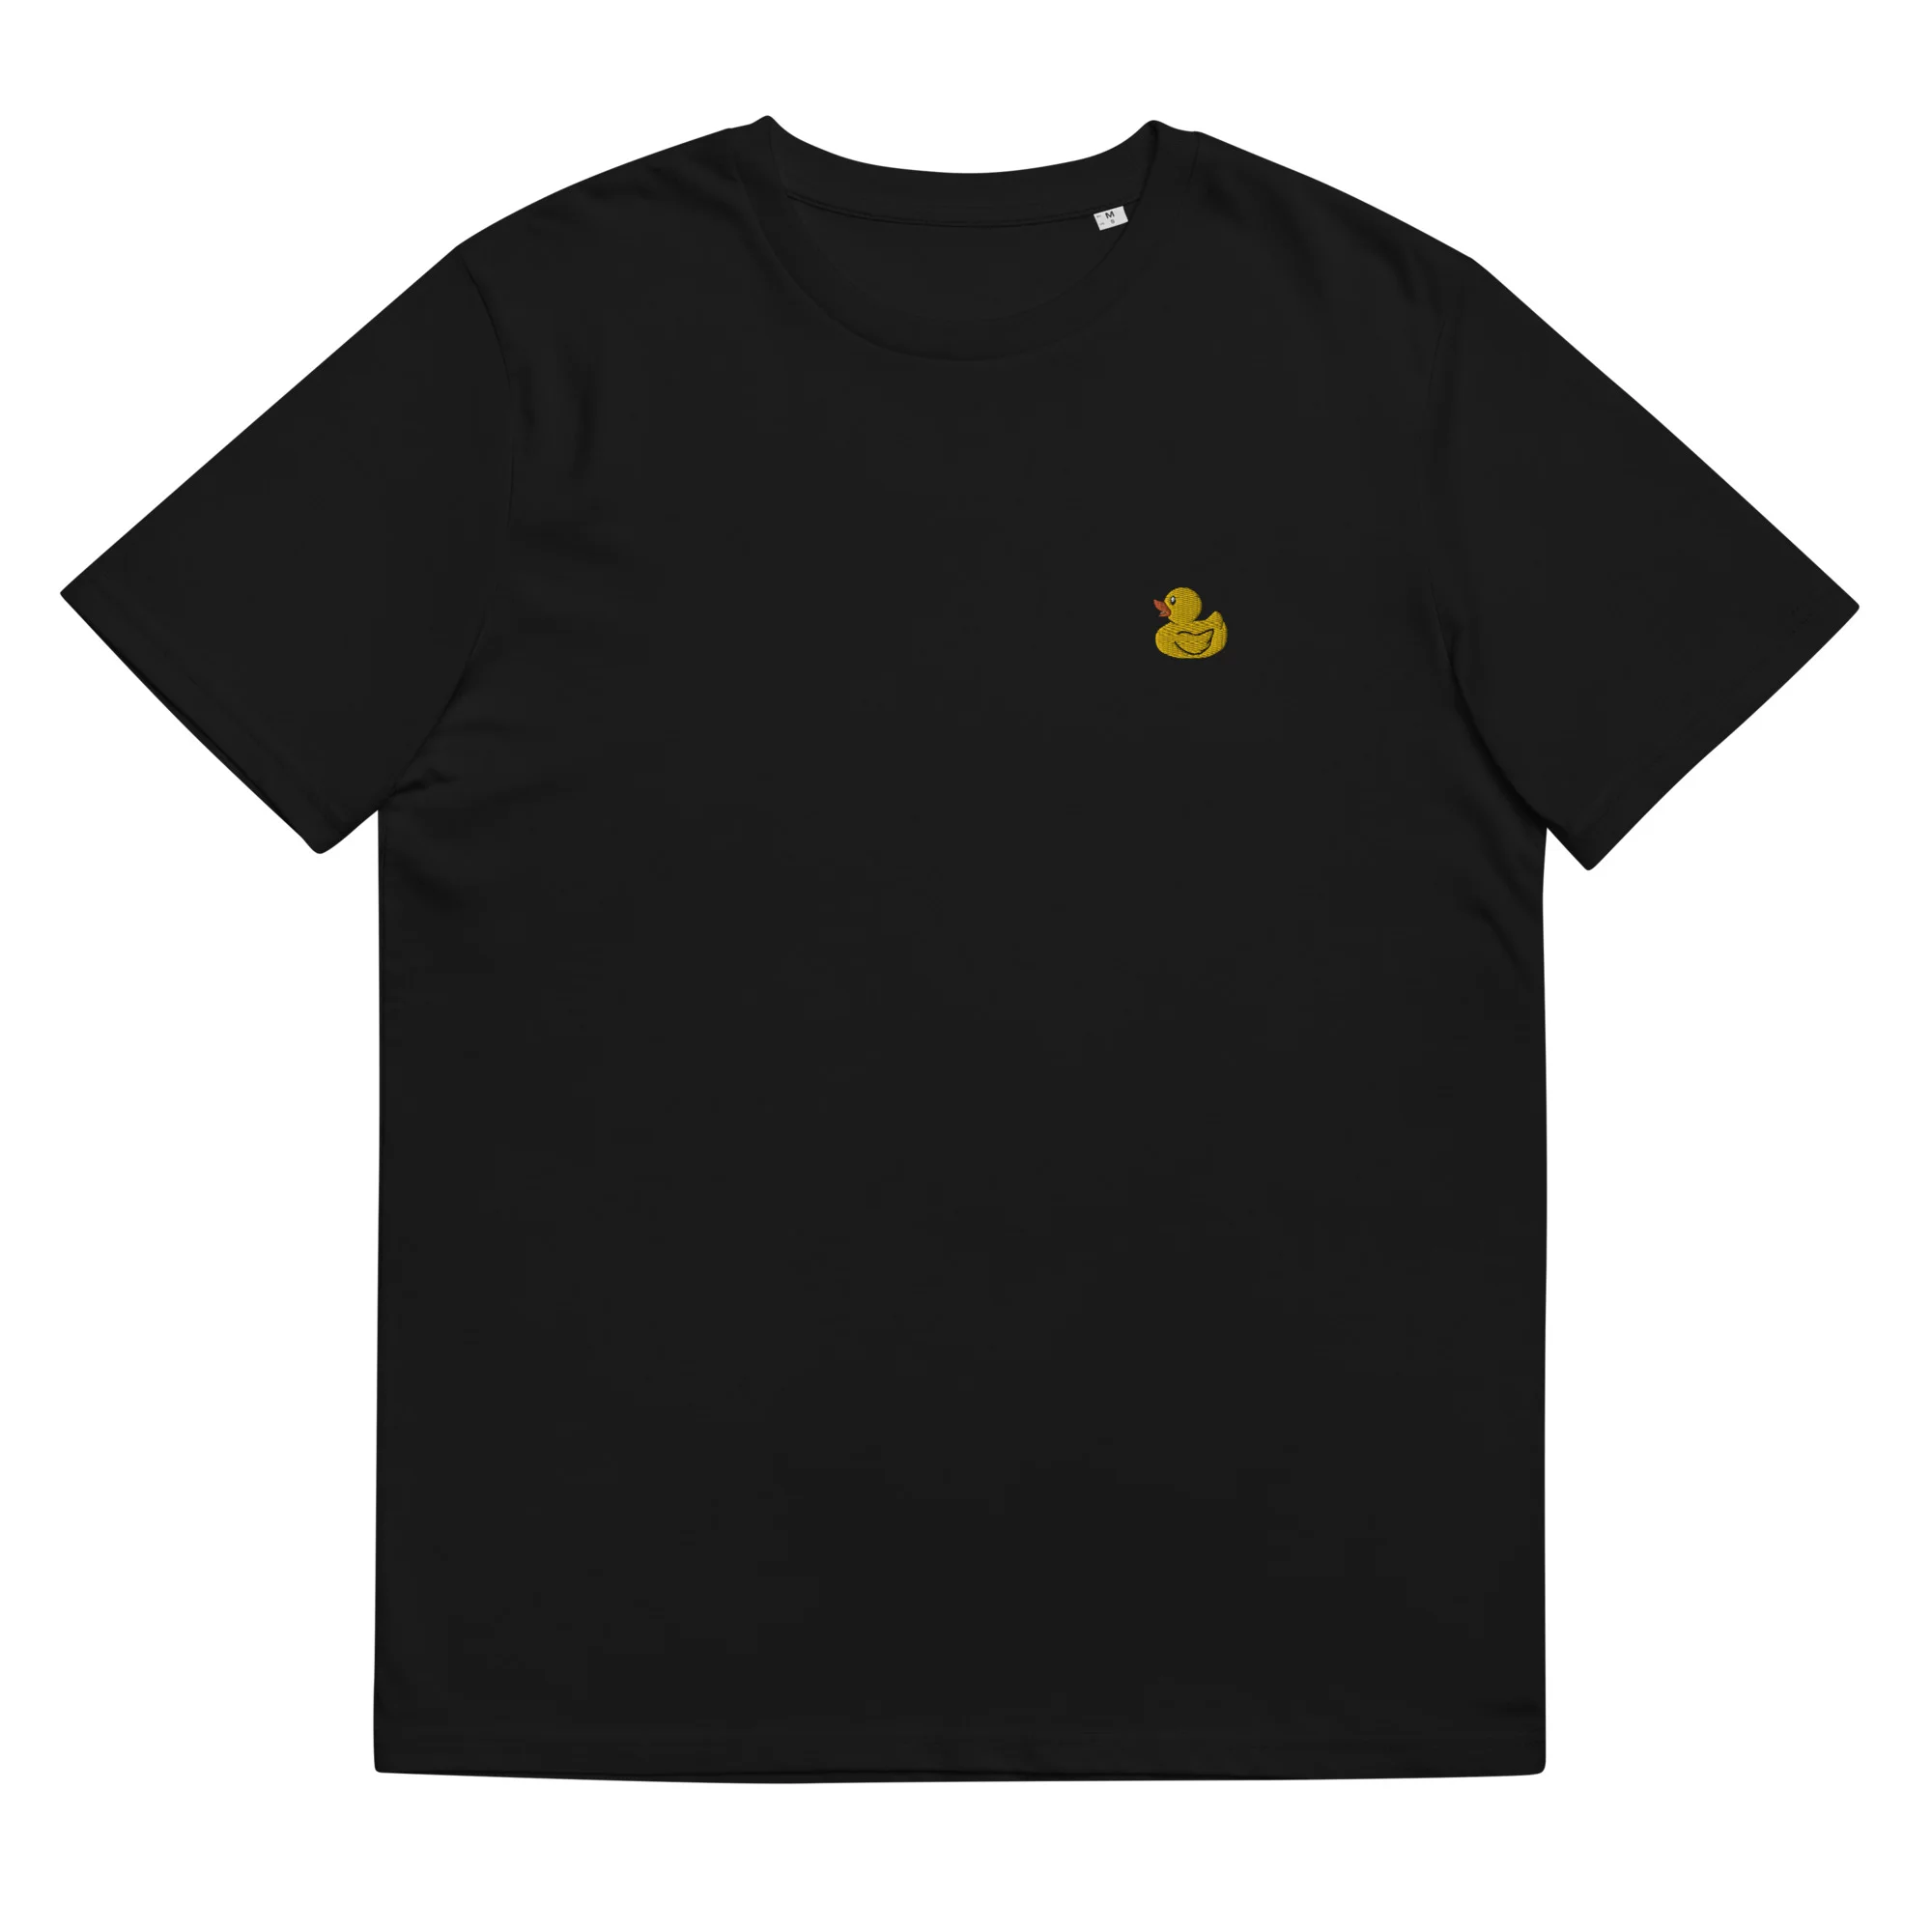 unisex organic cotton t shirt black front 64773edeb2ae9